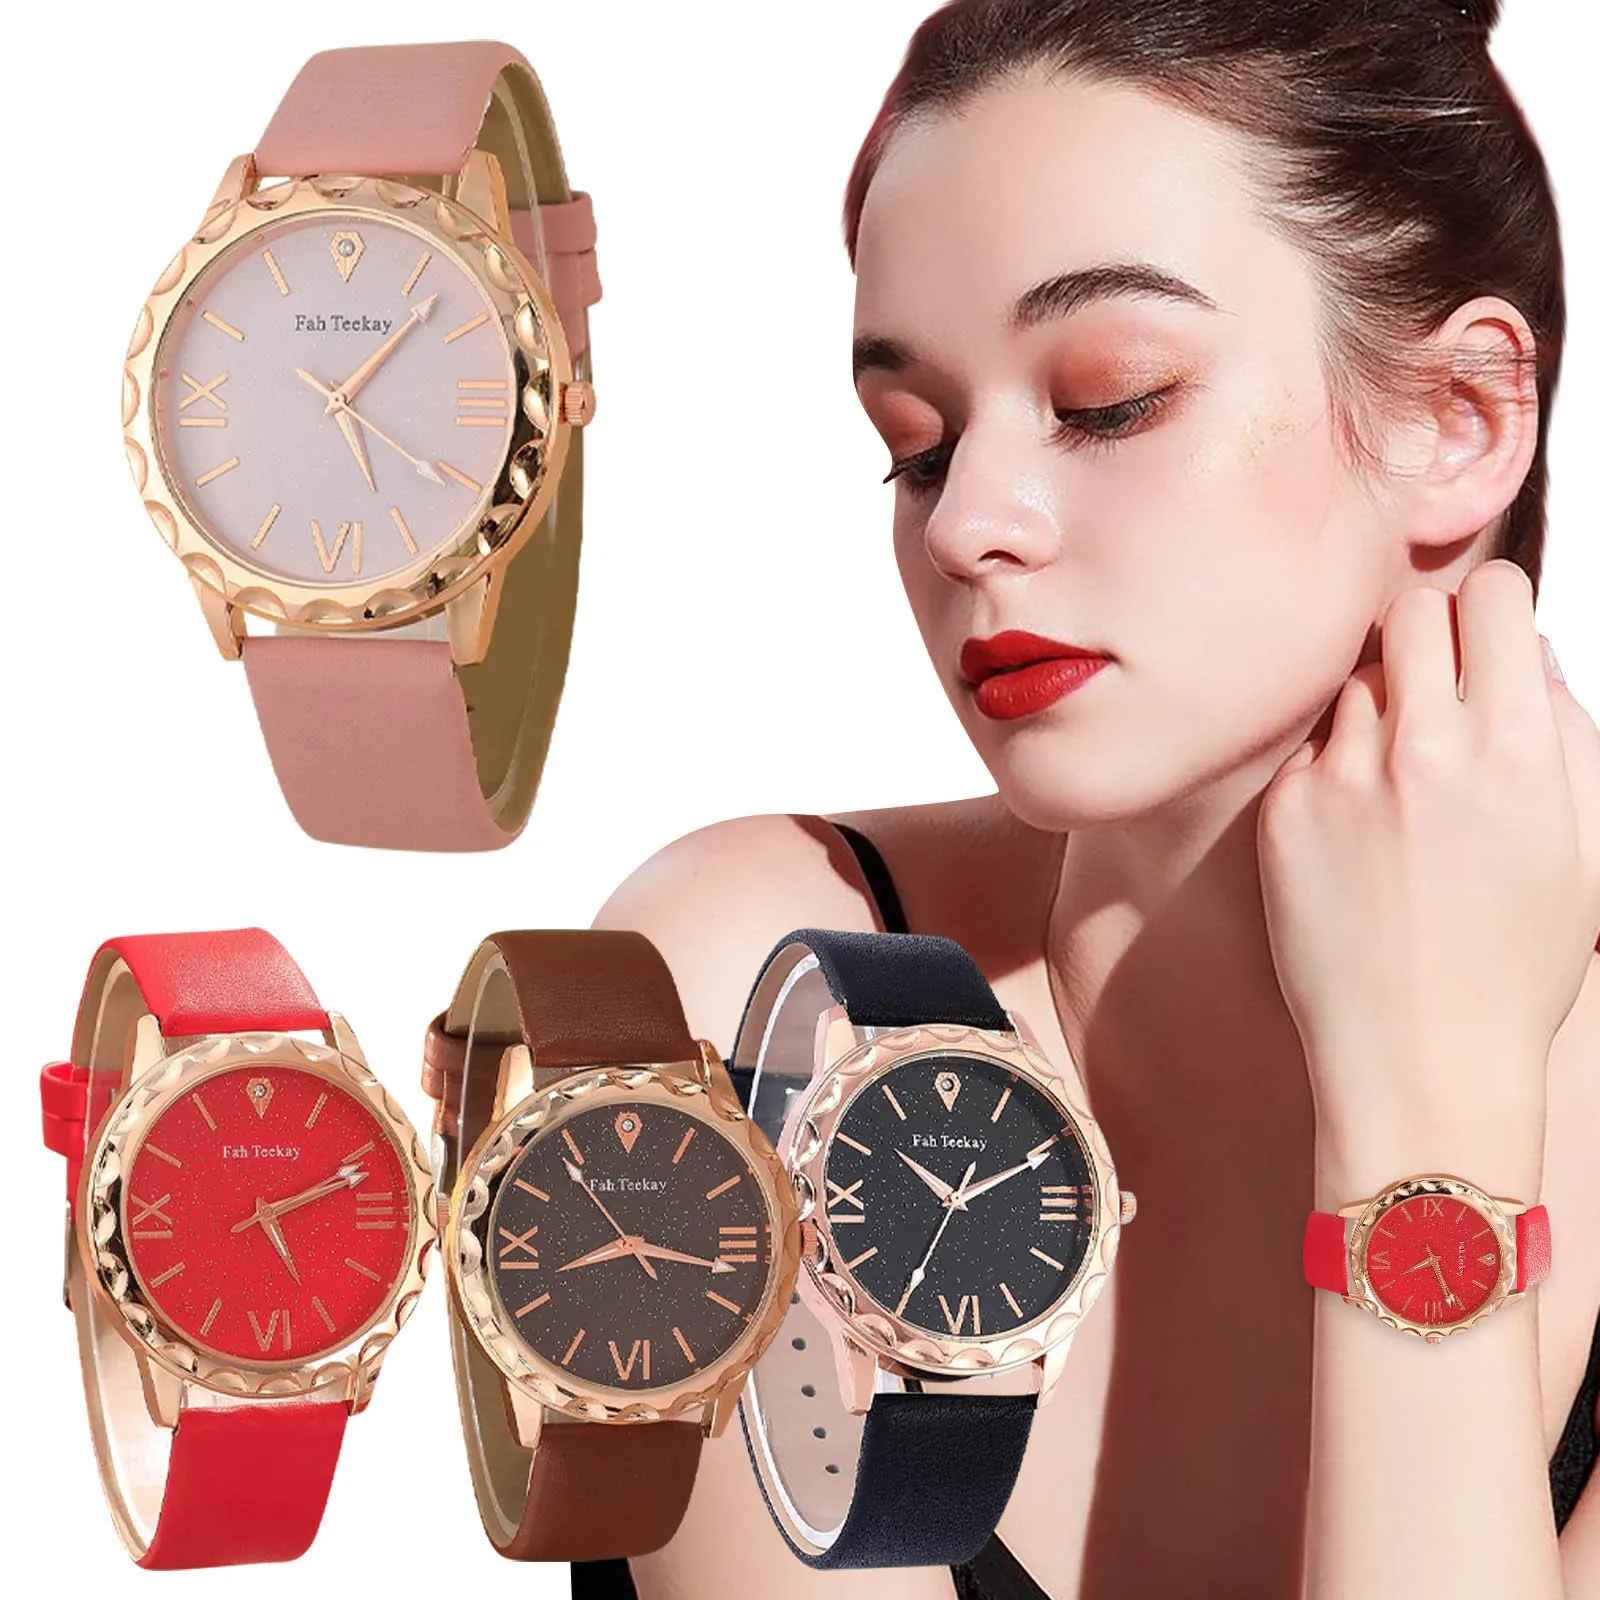 

Montre Femme Ladies Watch Leather Strap Analog Quartz Fashion Quartz Wristwatches Top Brand Vintage Watch For Women Free Shiping